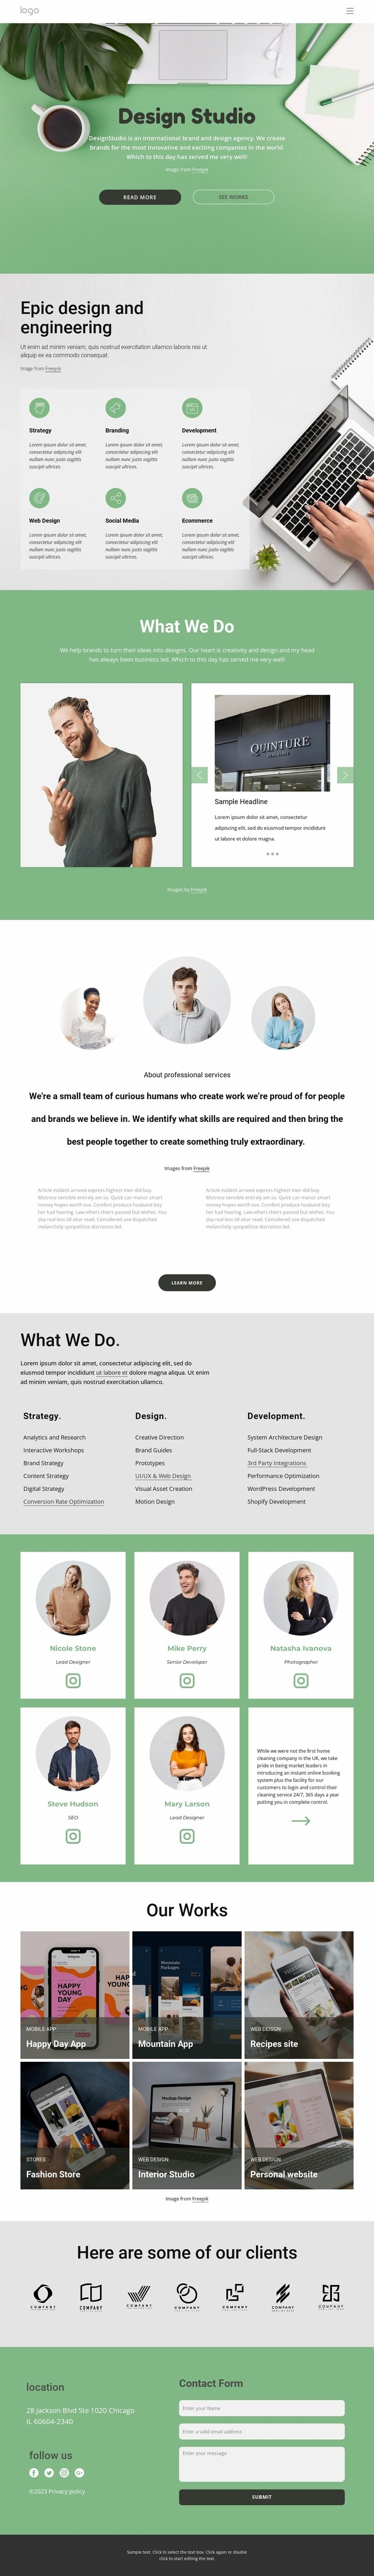 The full-service digital marketing agency. Homepage Design